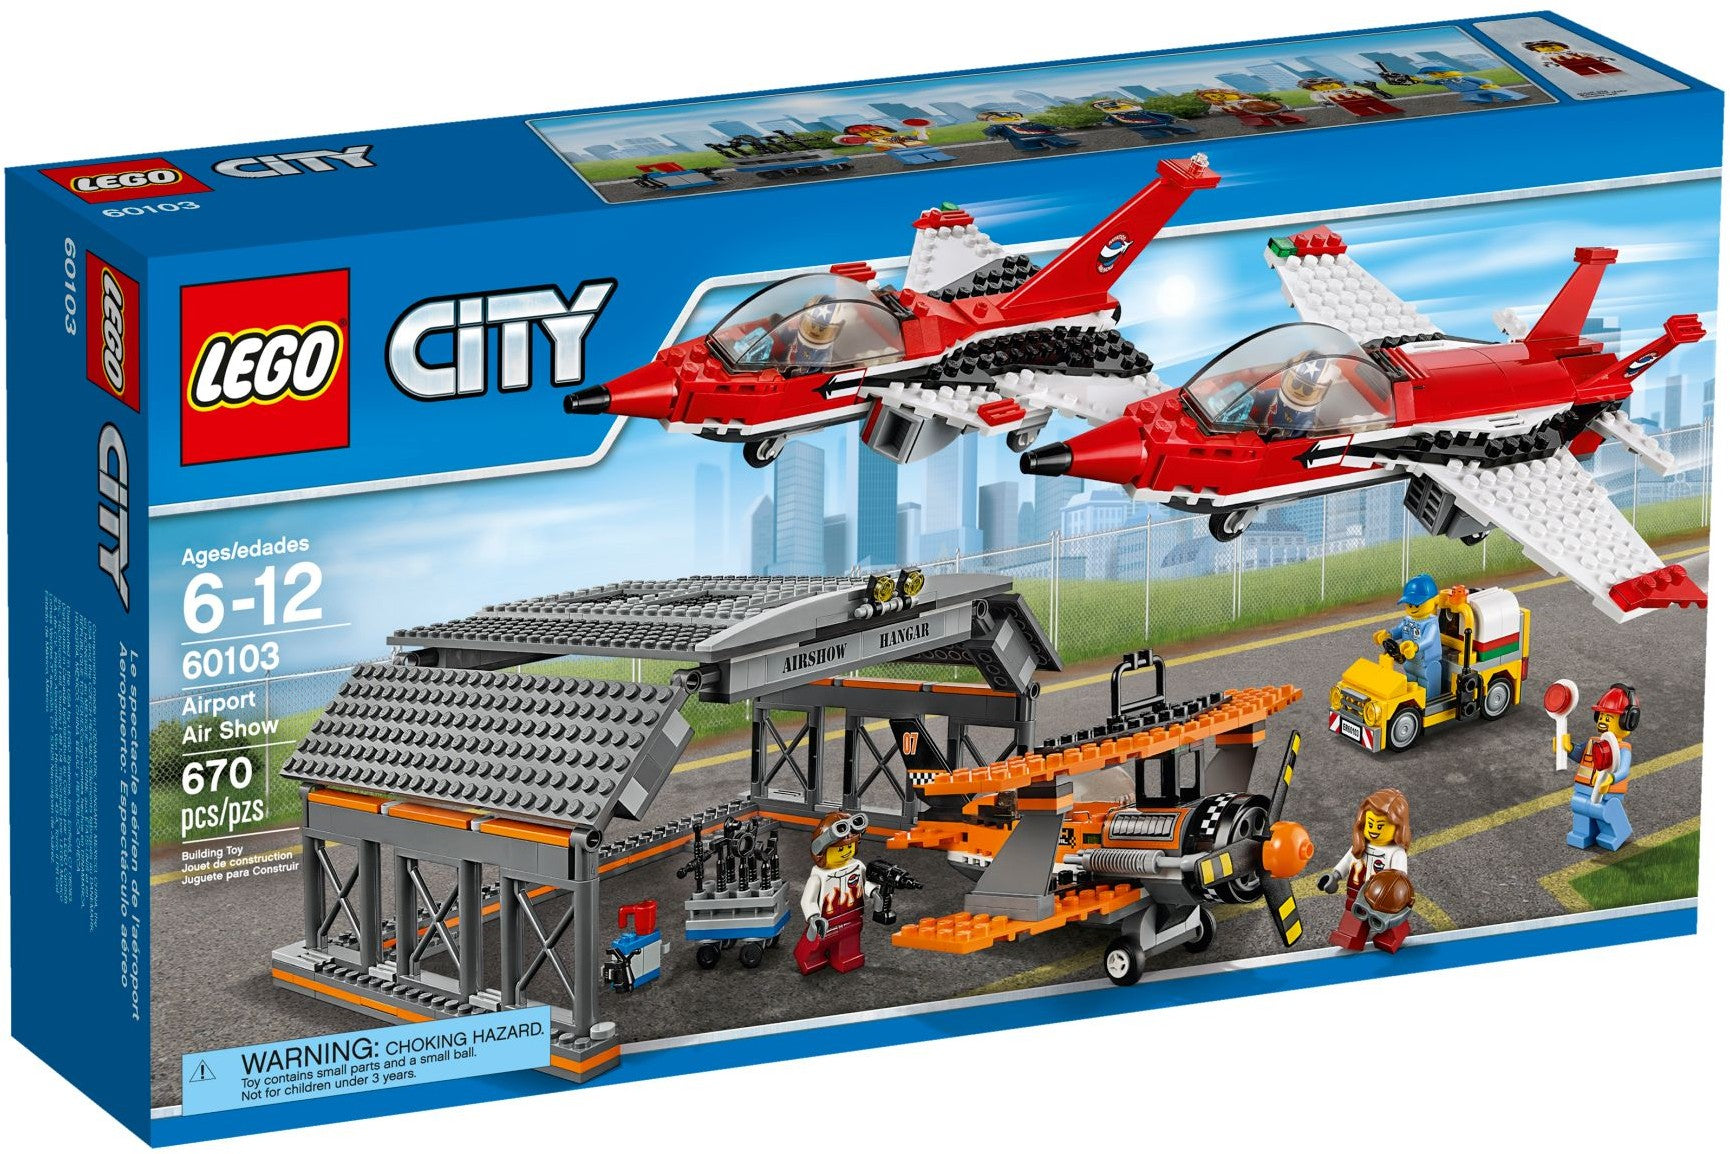 Lego City 60103 - Airport Air Show